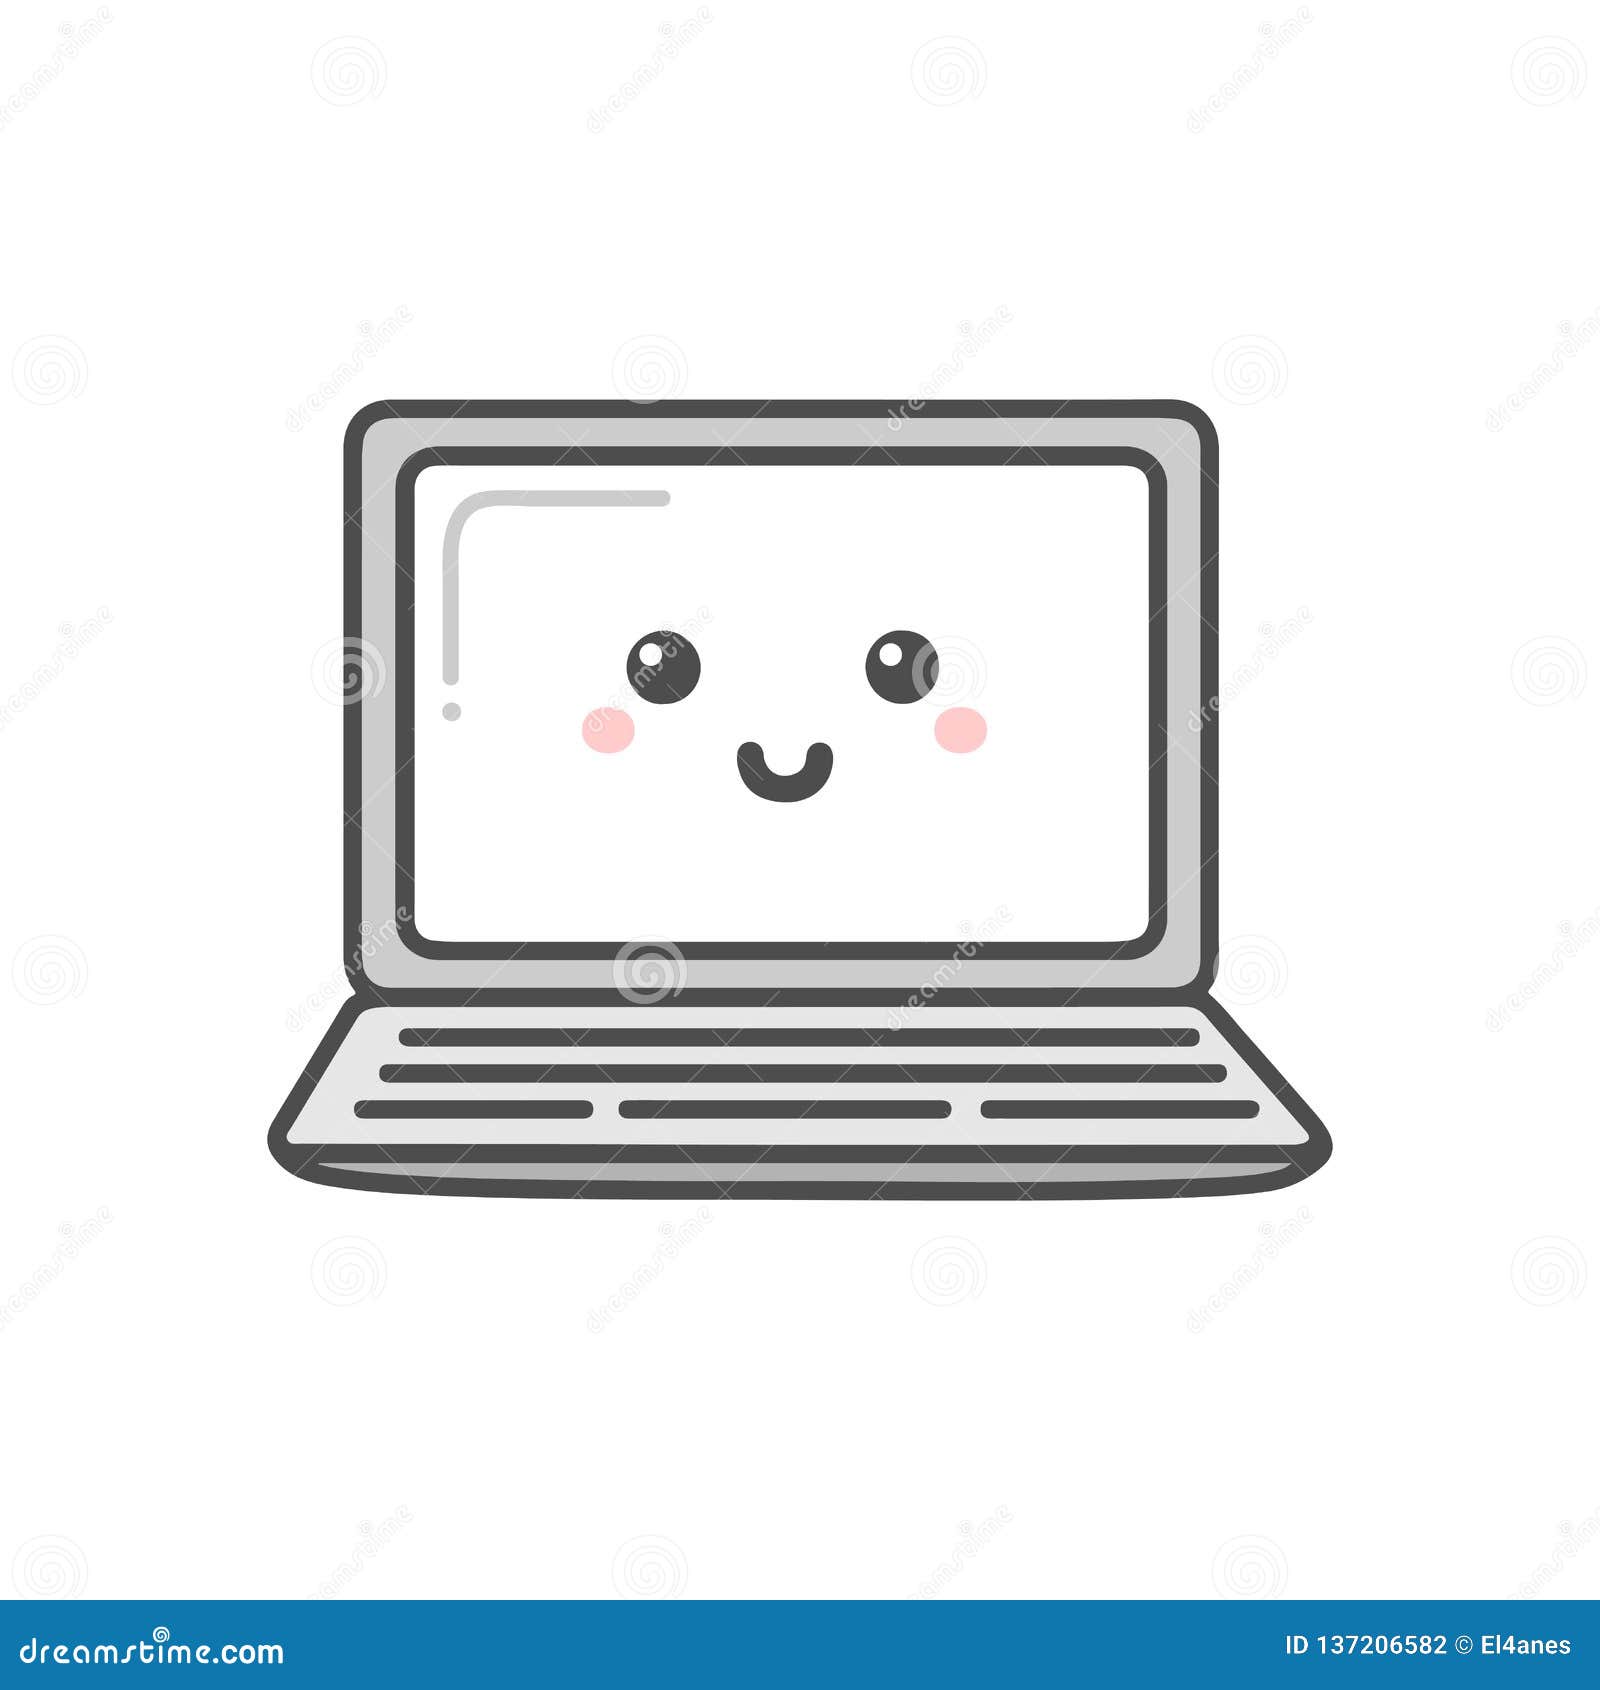 Cute laptop icon stock vector. Illustration of blush - 137206582